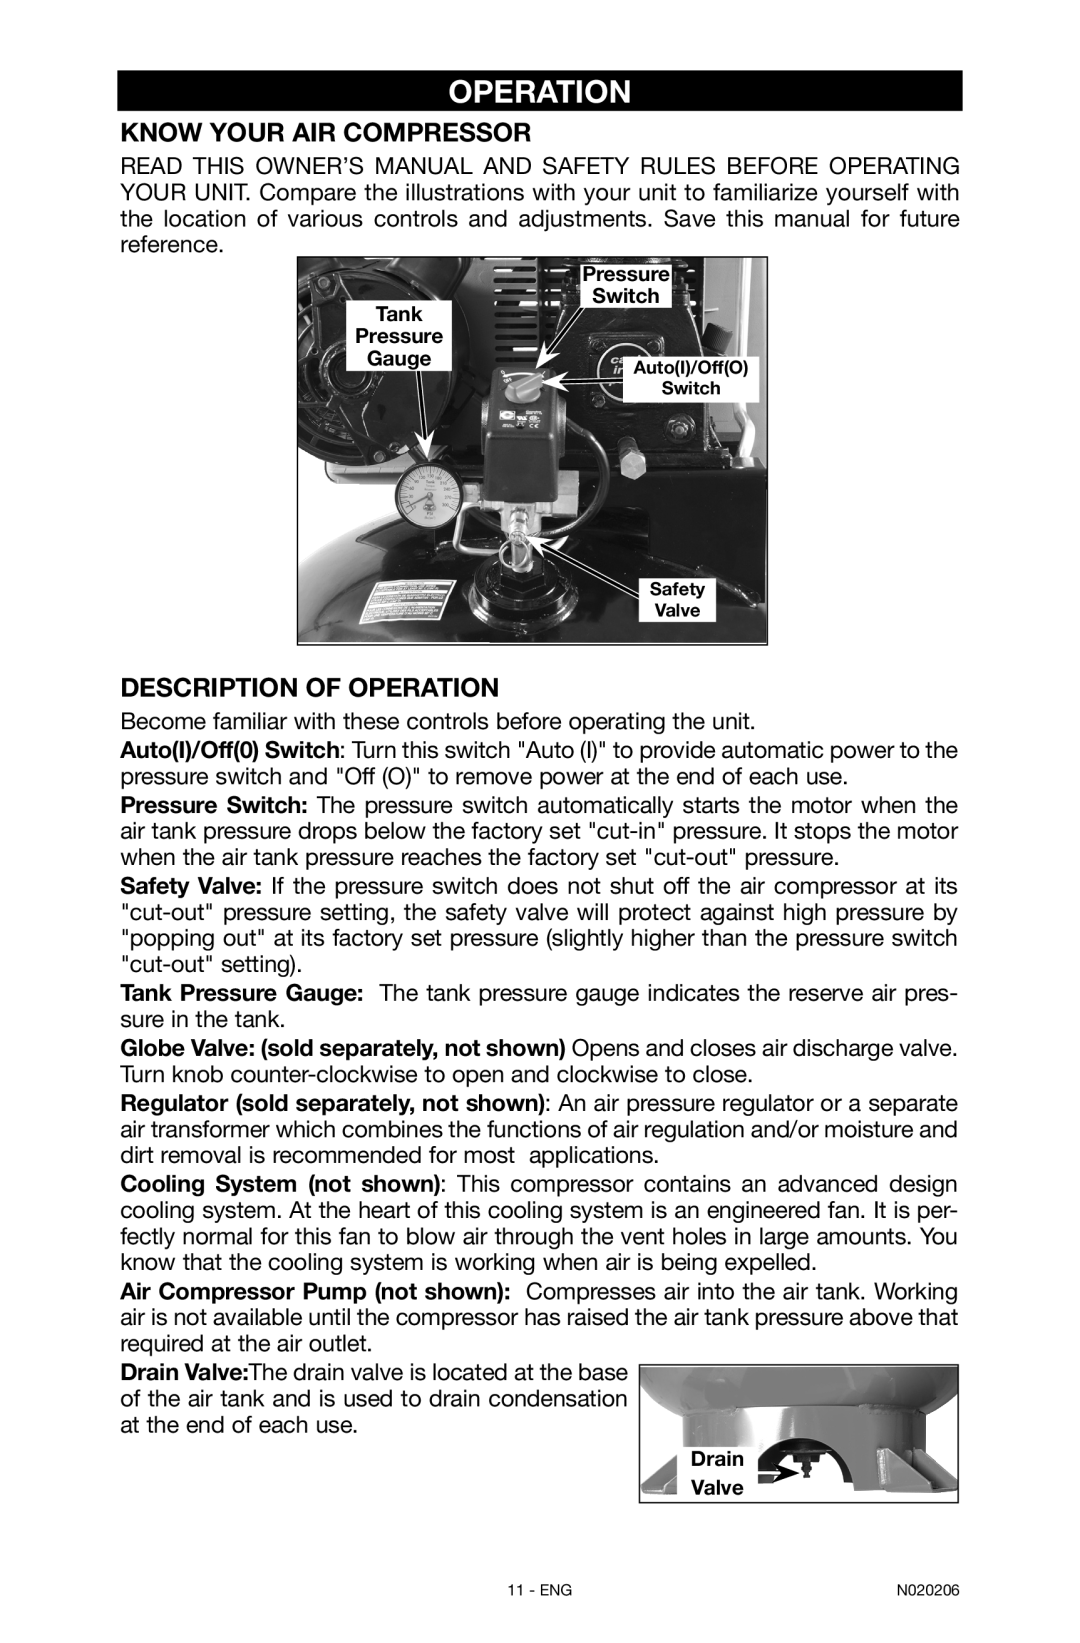 Porter-Cable C7501M, N020206-NOV08-0 instruction manual Know Your Air Compressor, Description of Operation 